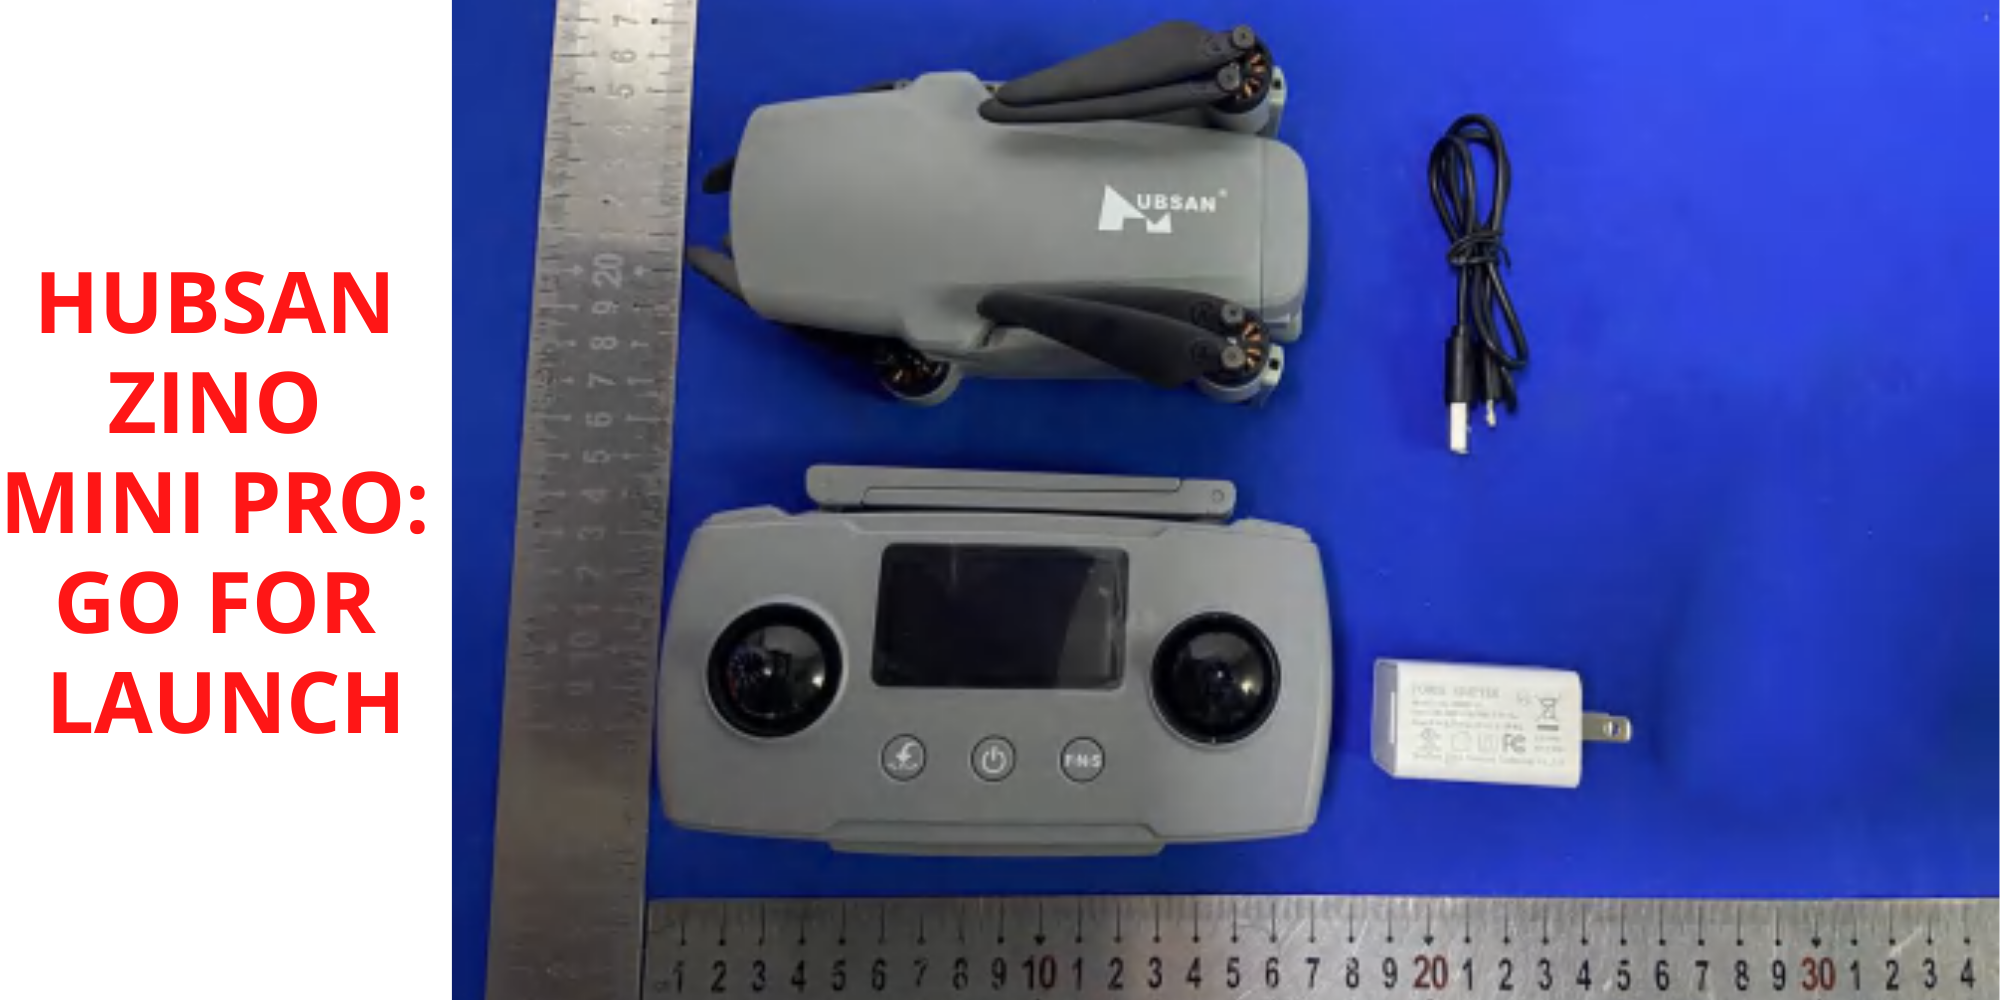 Hubsan's Zino Mini Pro drone hits FCC database before launch- DroneDJ